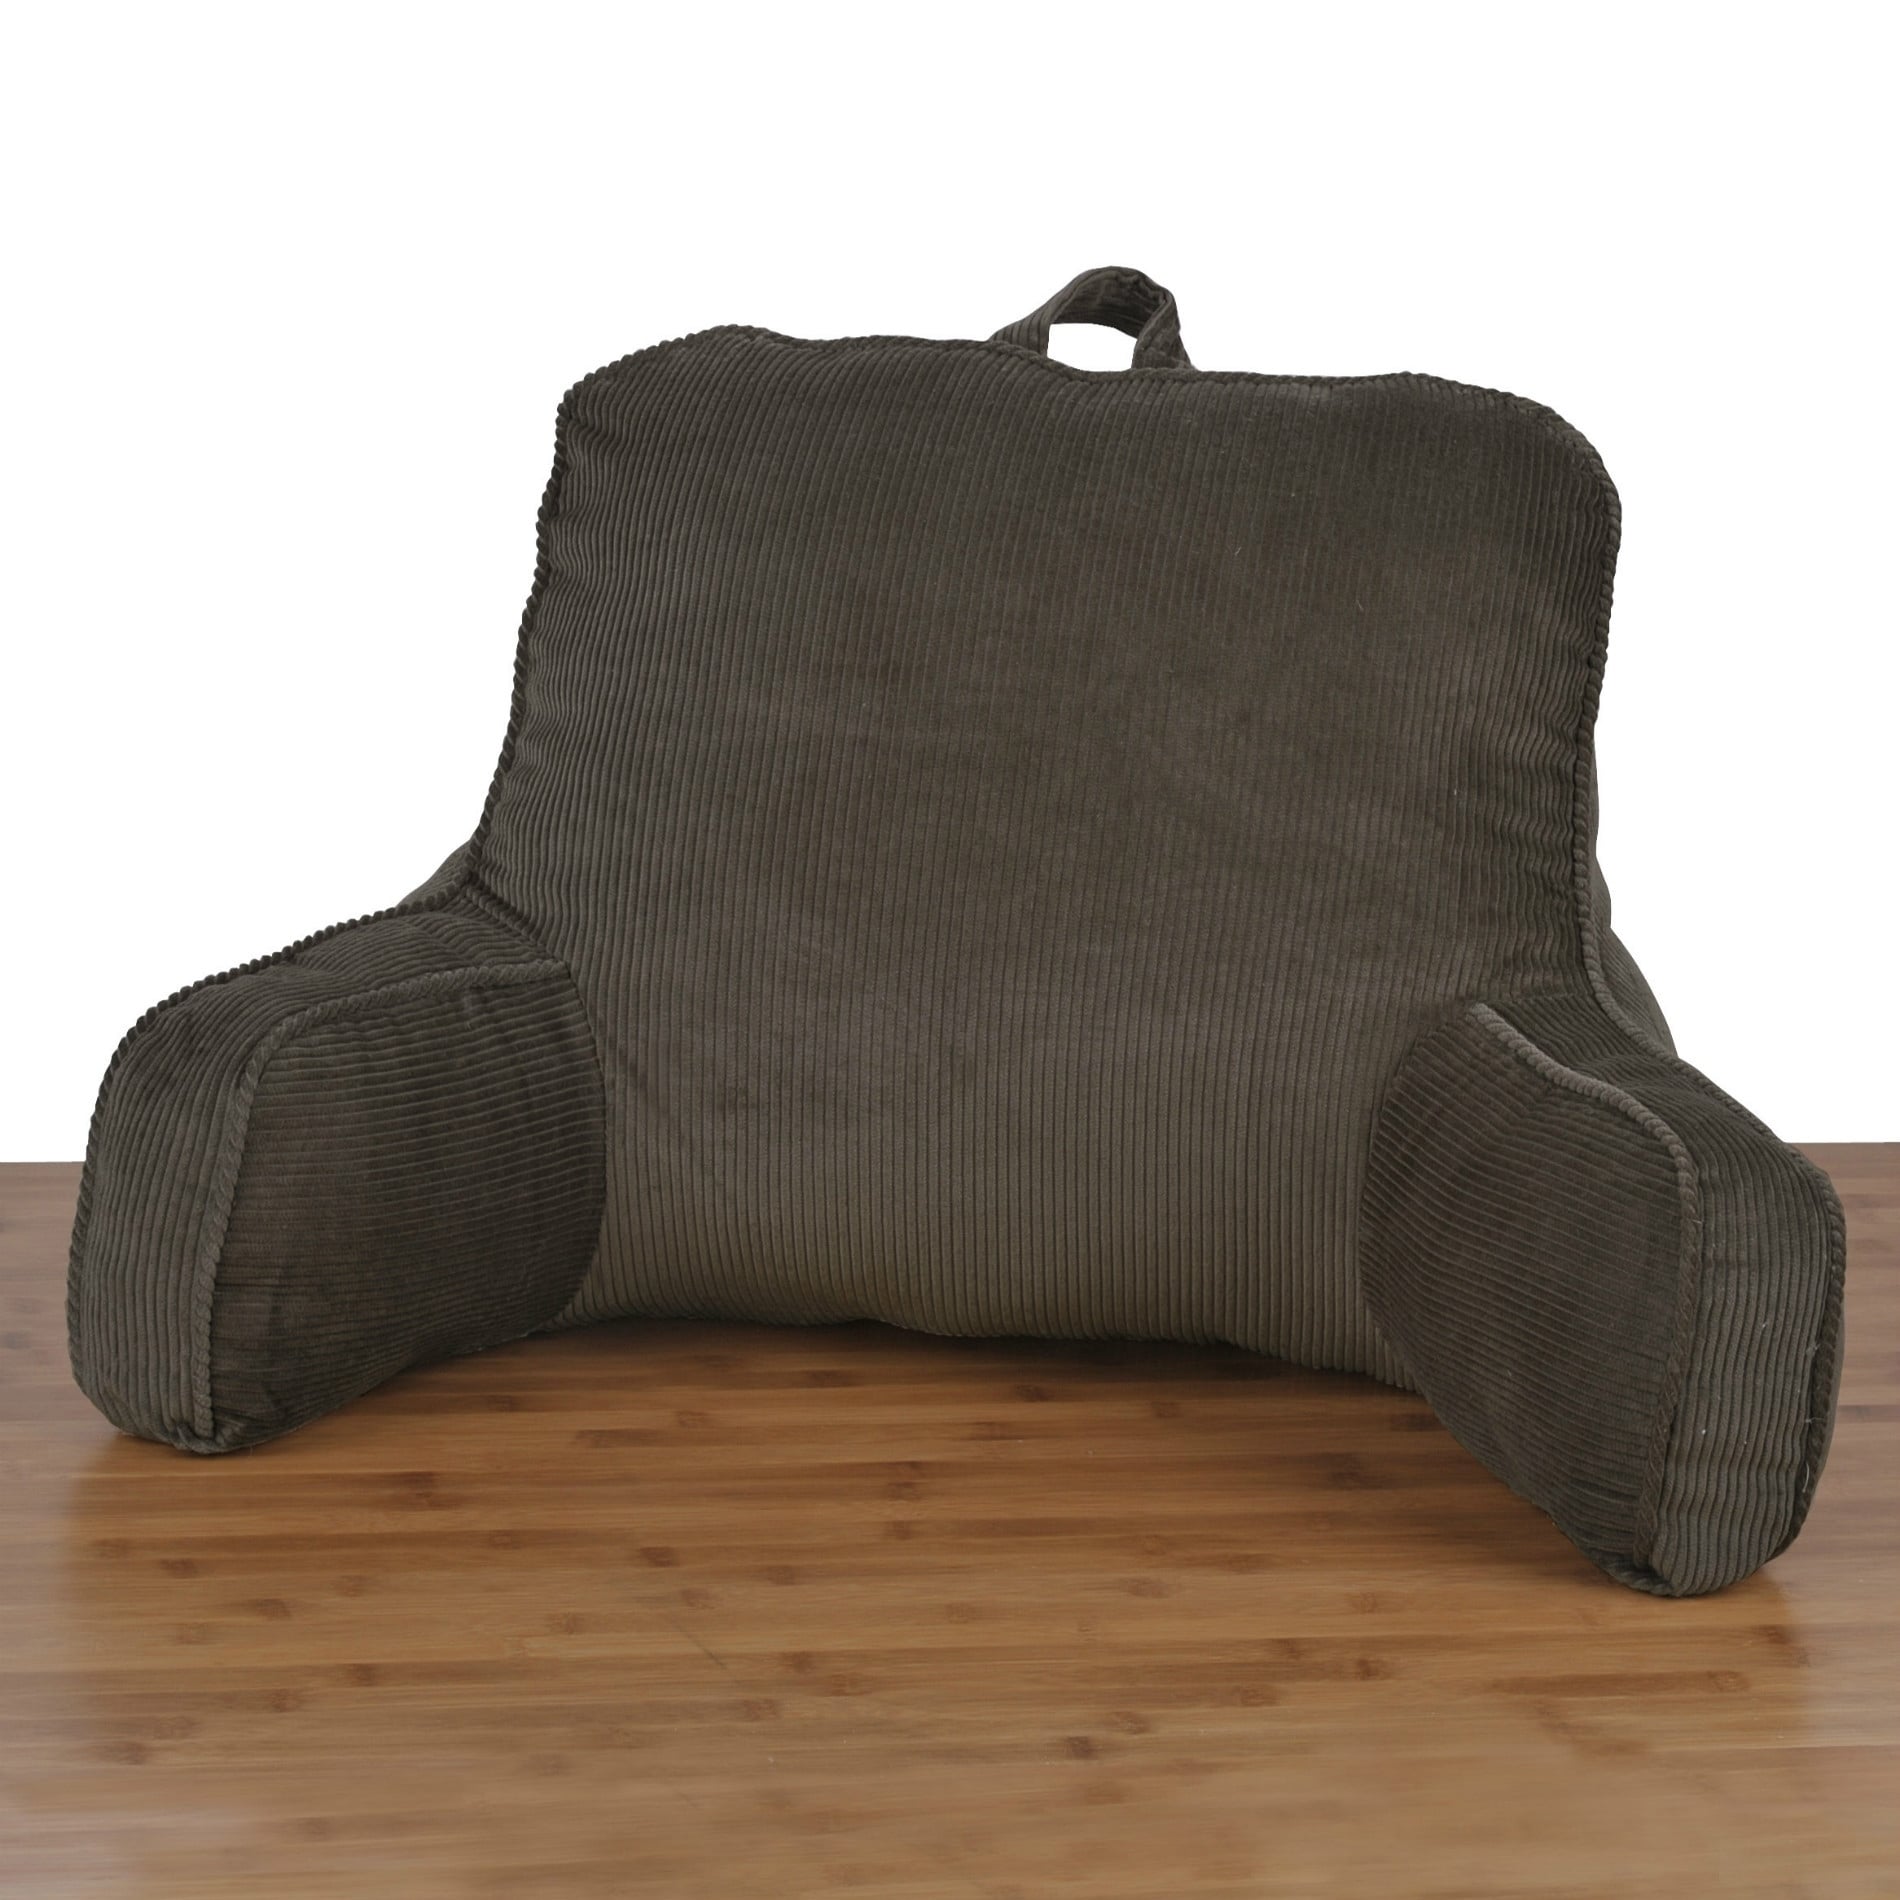 Shop Serenta Cotton Corduroy Lounger Bed Rest Pillow Adjustable